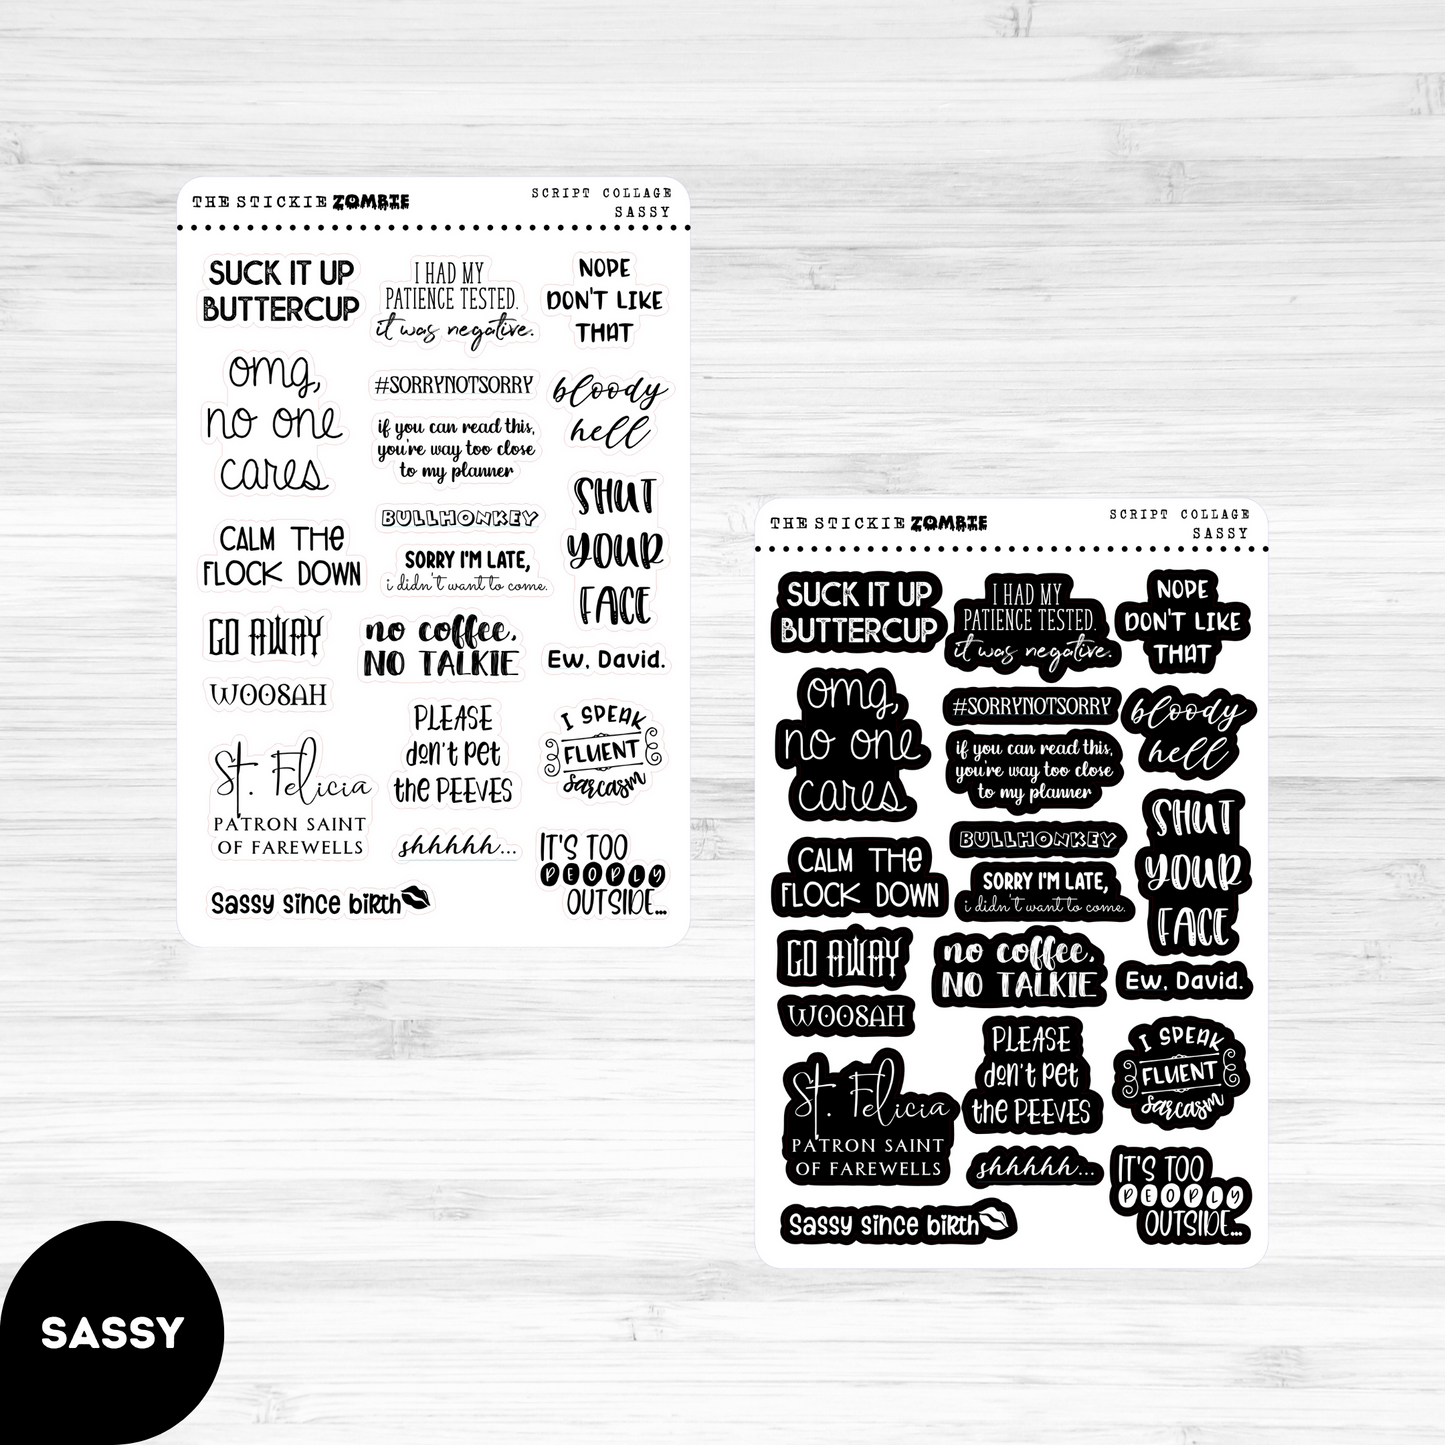 Script Words / Collage / Sassy 1